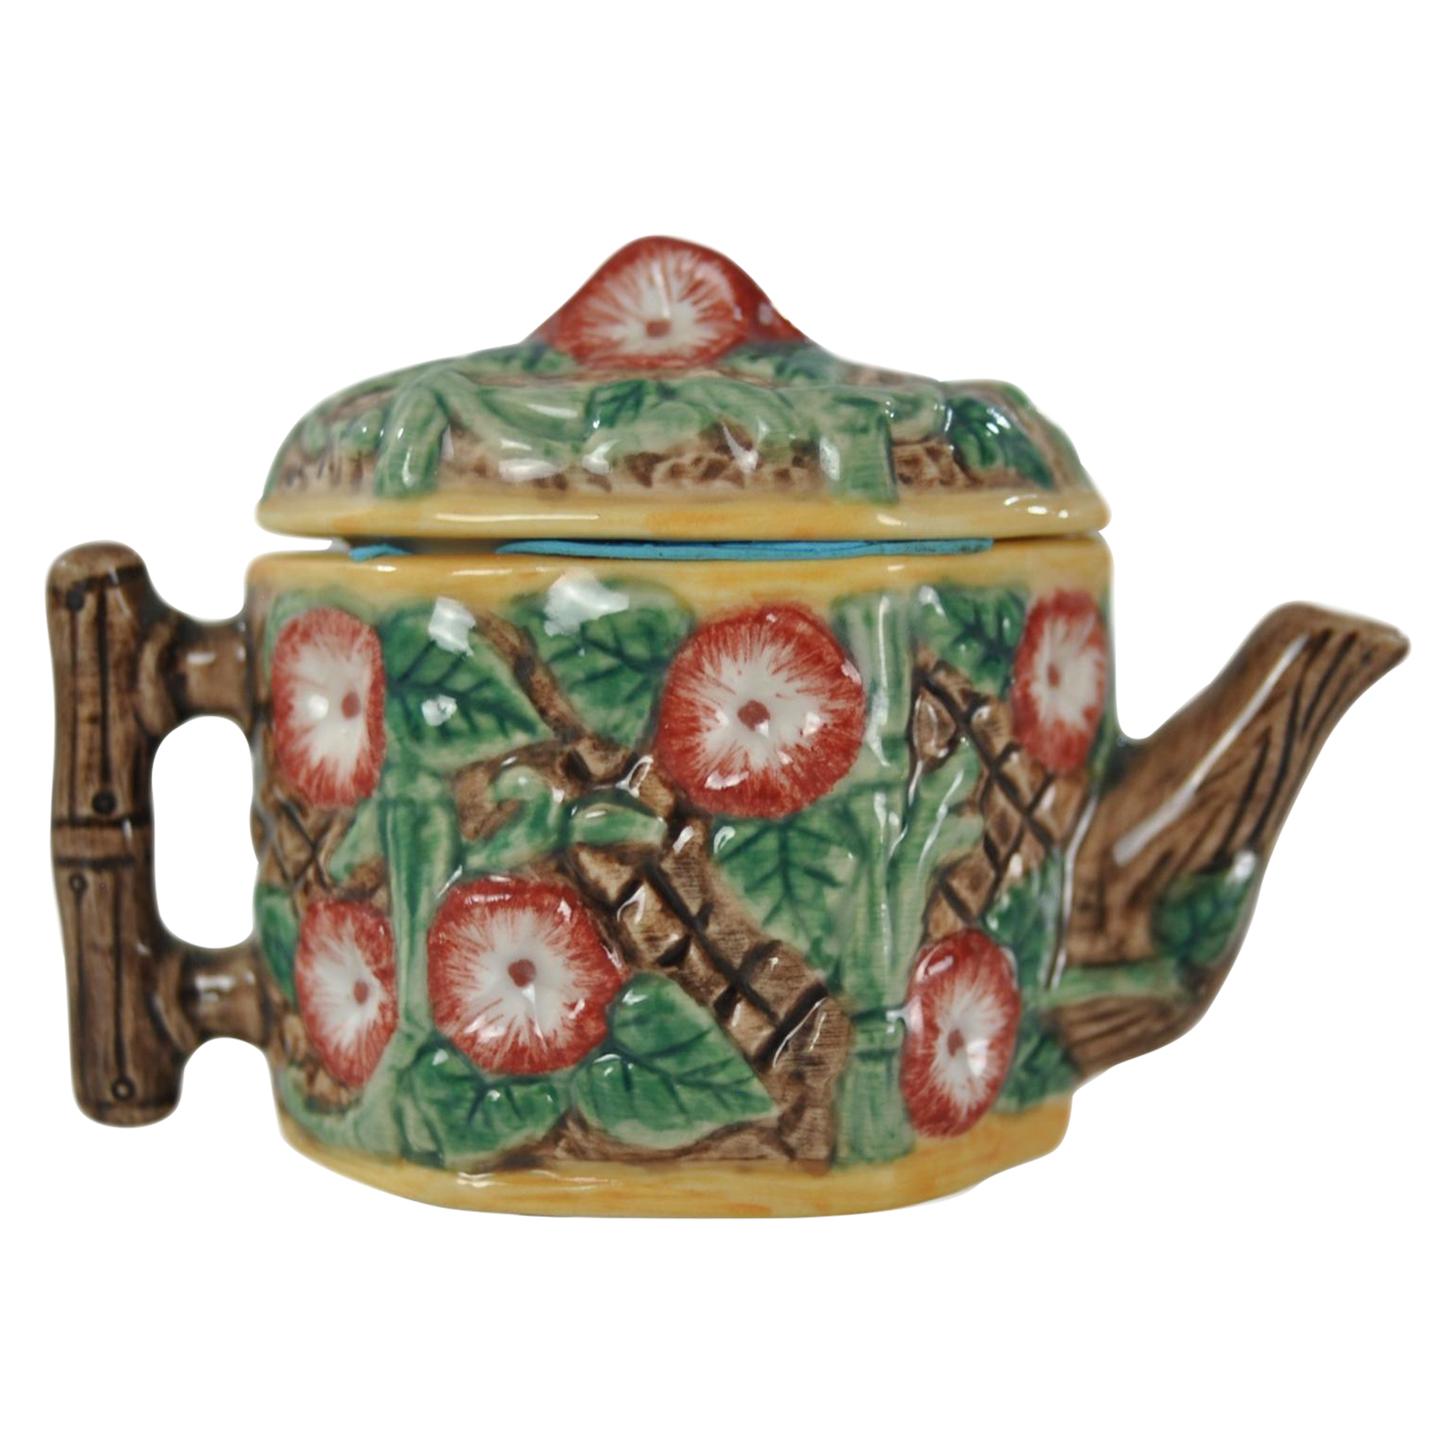 Miniature Majolica-Glazed Teapot, on a Porcelain Body, English, circa 1920